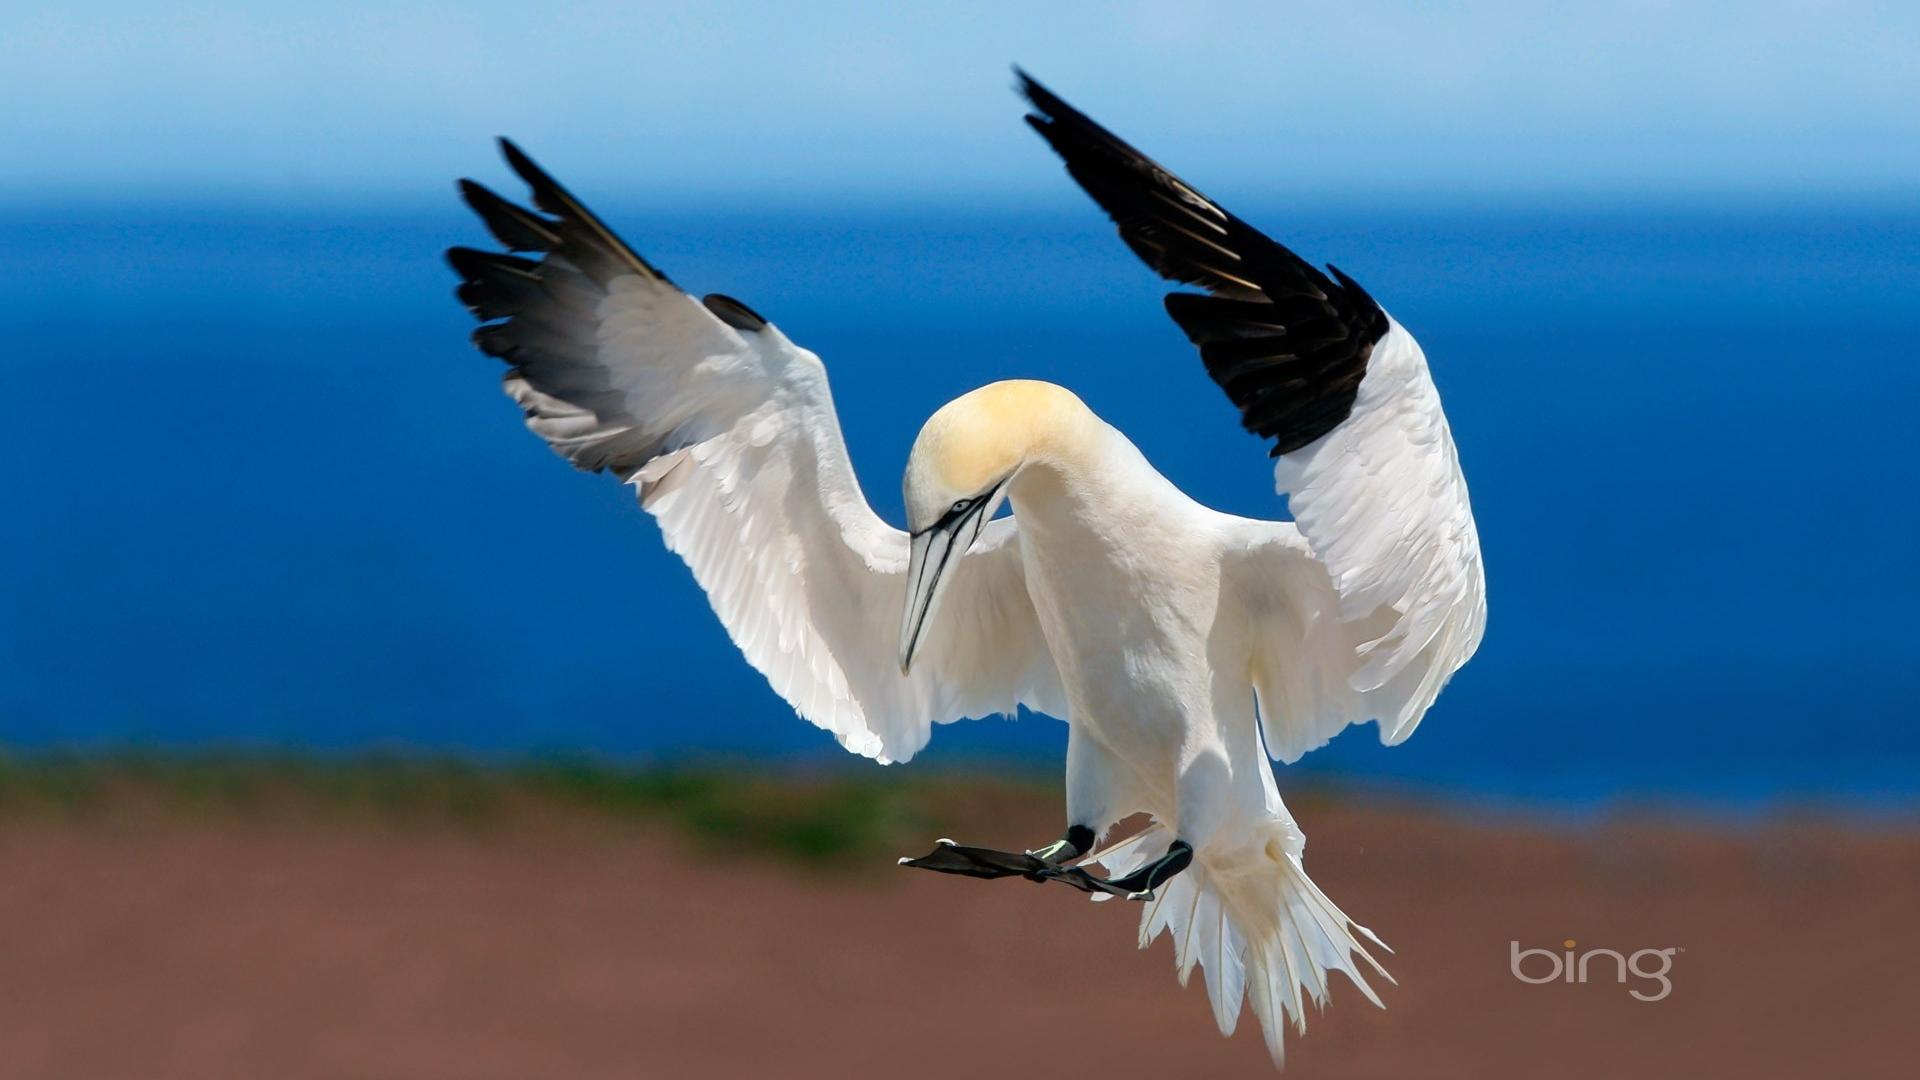 Bing animals birds gannets wallpaper 63640